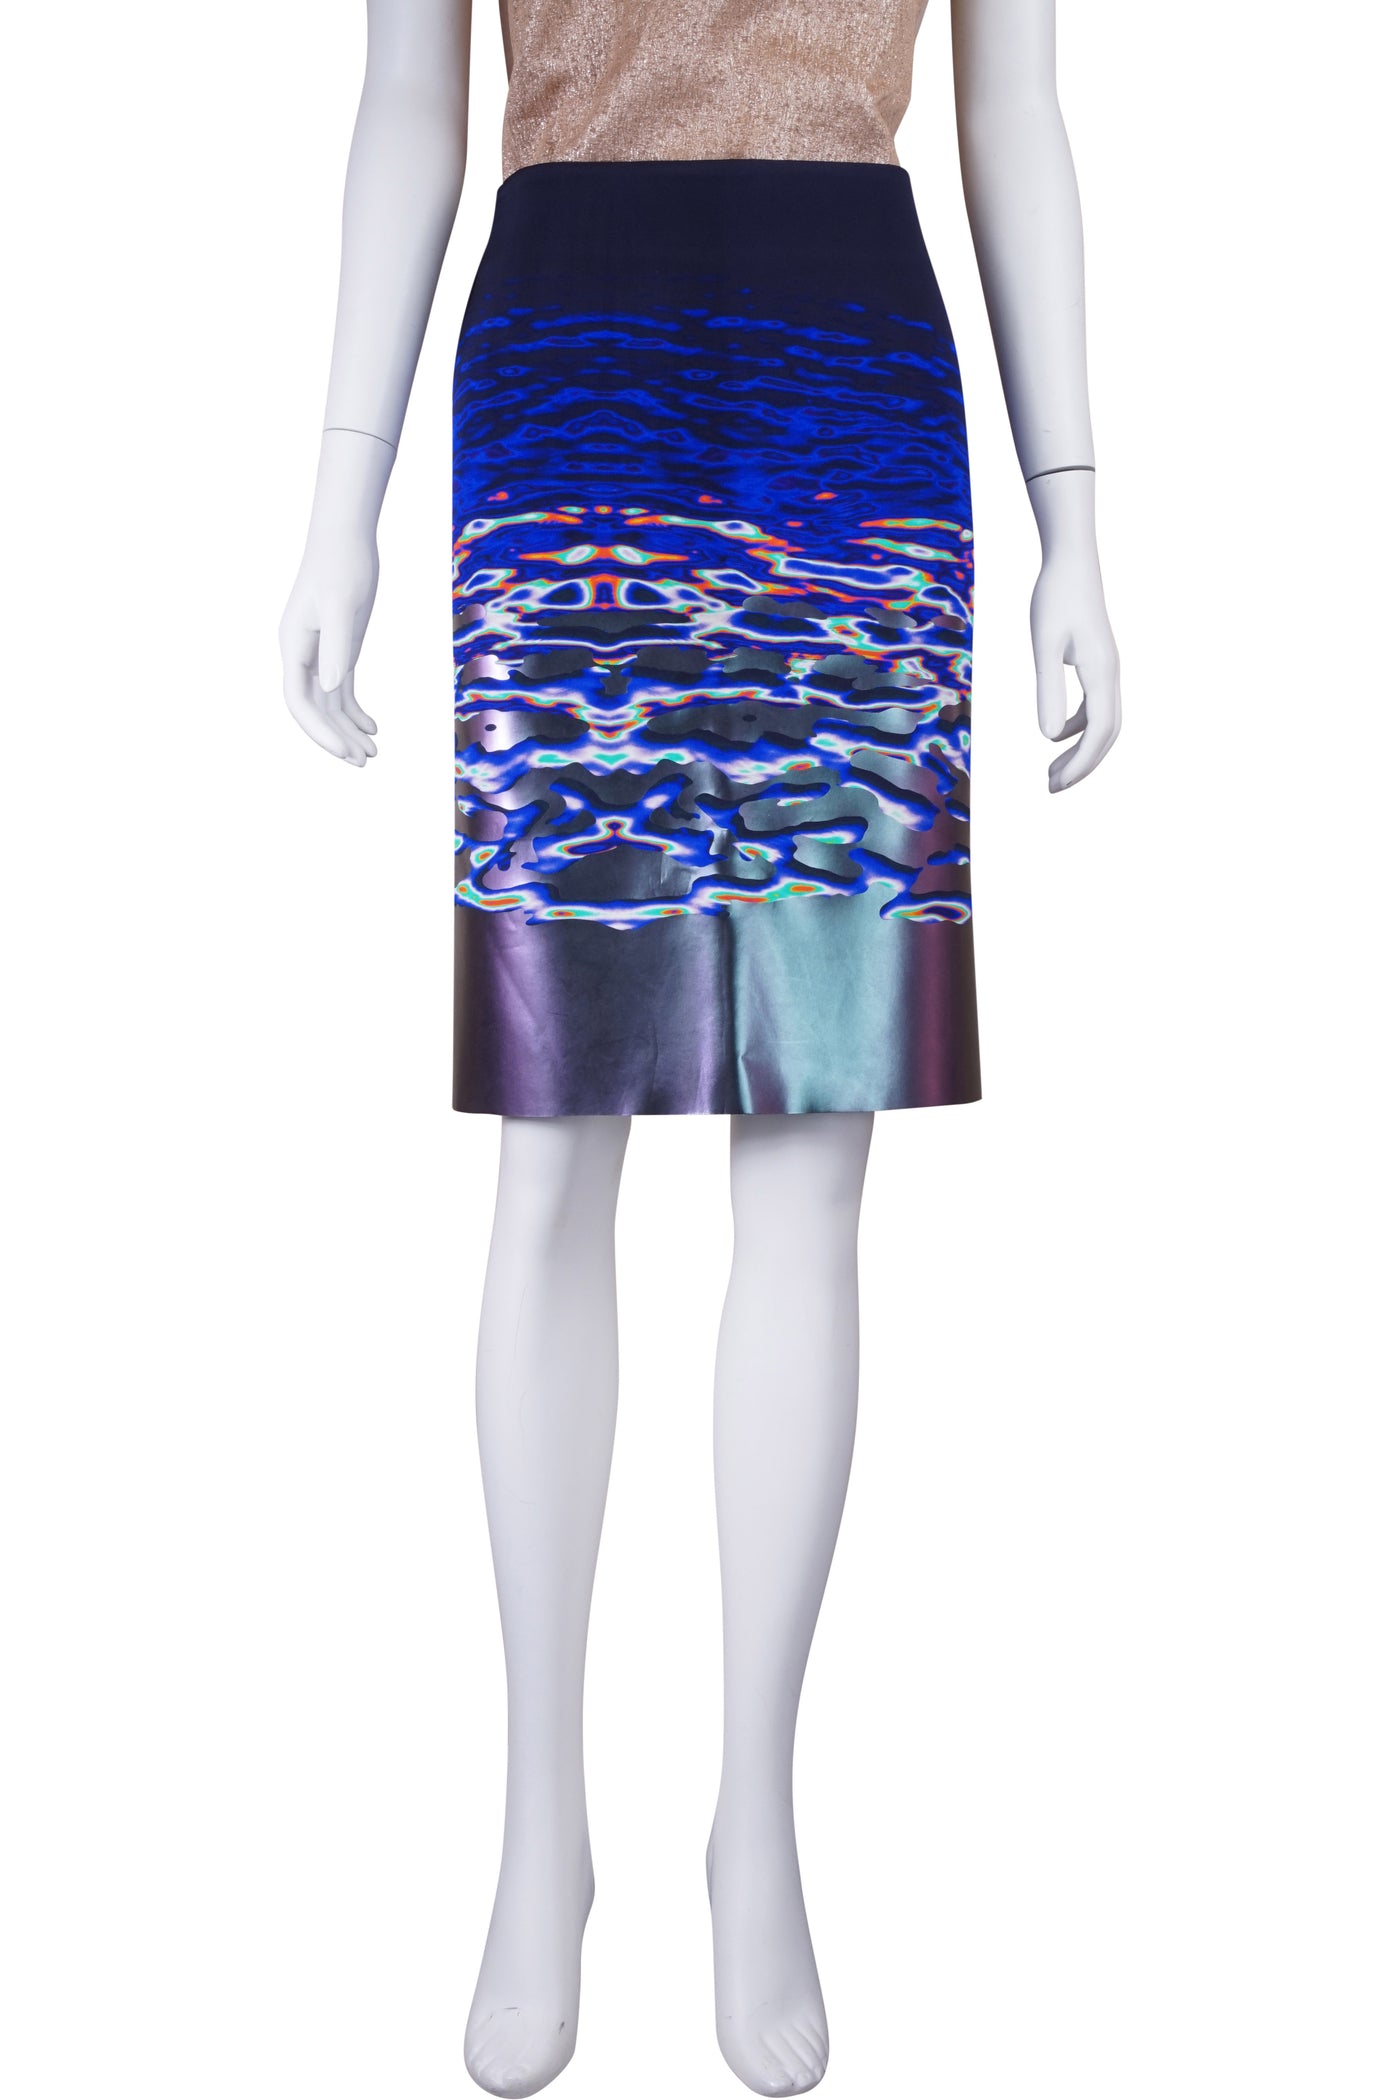 Surface ripple skirt